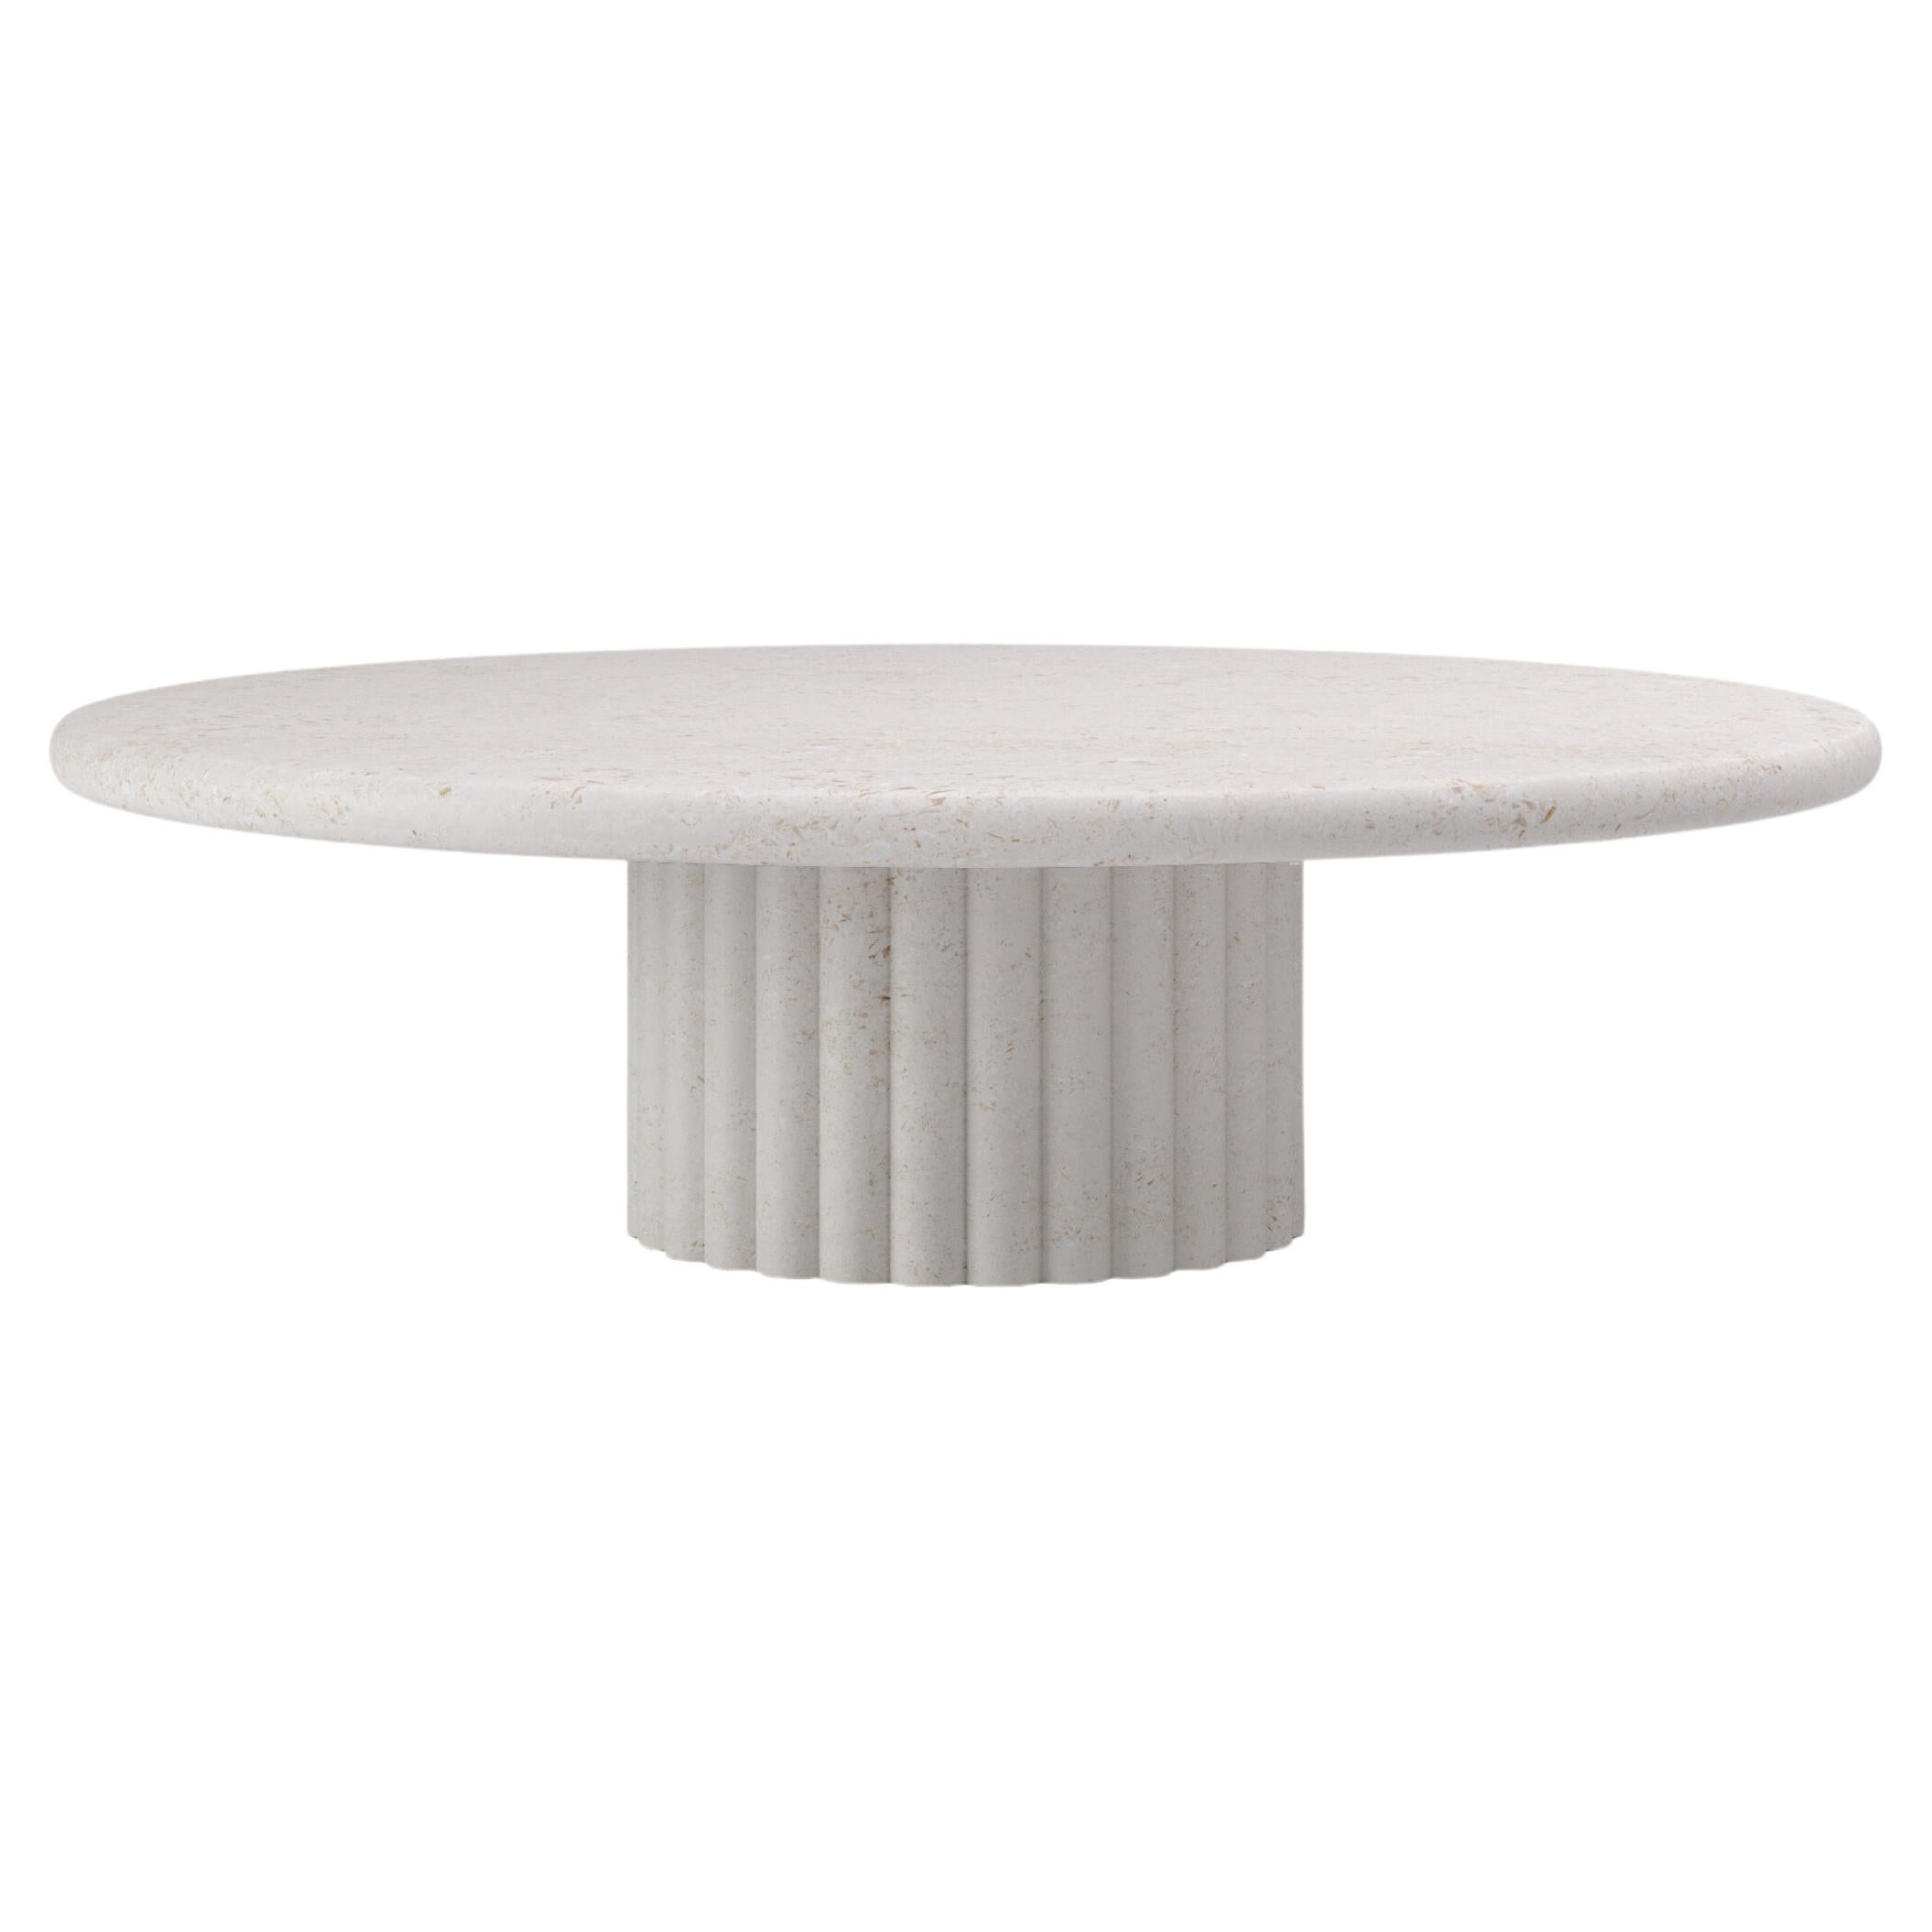 FORM(LA) Fluta Round Coffee Table 54”L x 54”W x 14”H Limestone Oceano